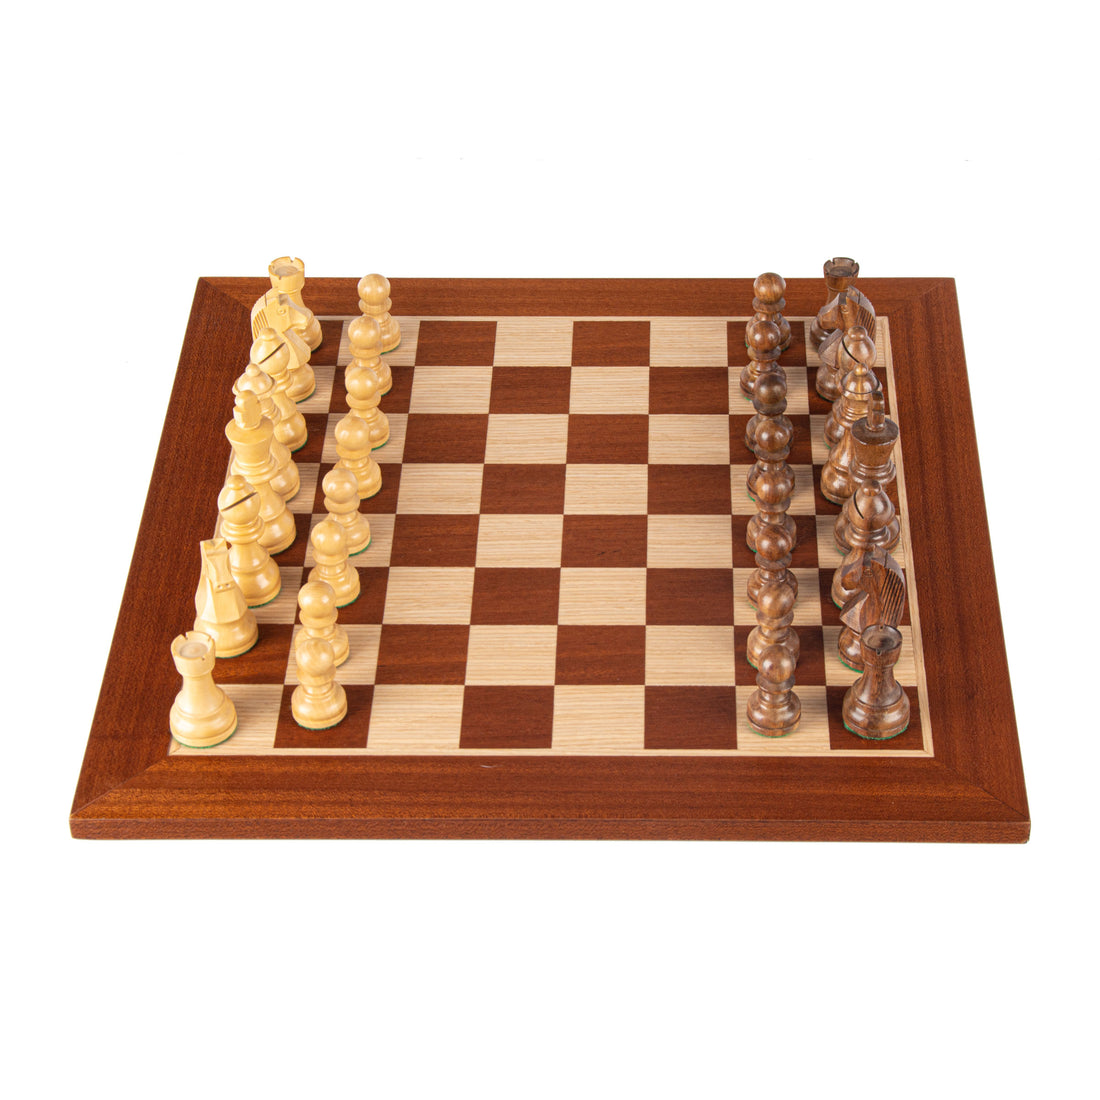 Mahogany Chess Set - 40x40cm with Staunton Chessmen (8.5cm King) - Premium Chess from MANOPOULOS Chess & Backgammon - Just €172! Shop now at MANOPOULOS Chess & Backgammon